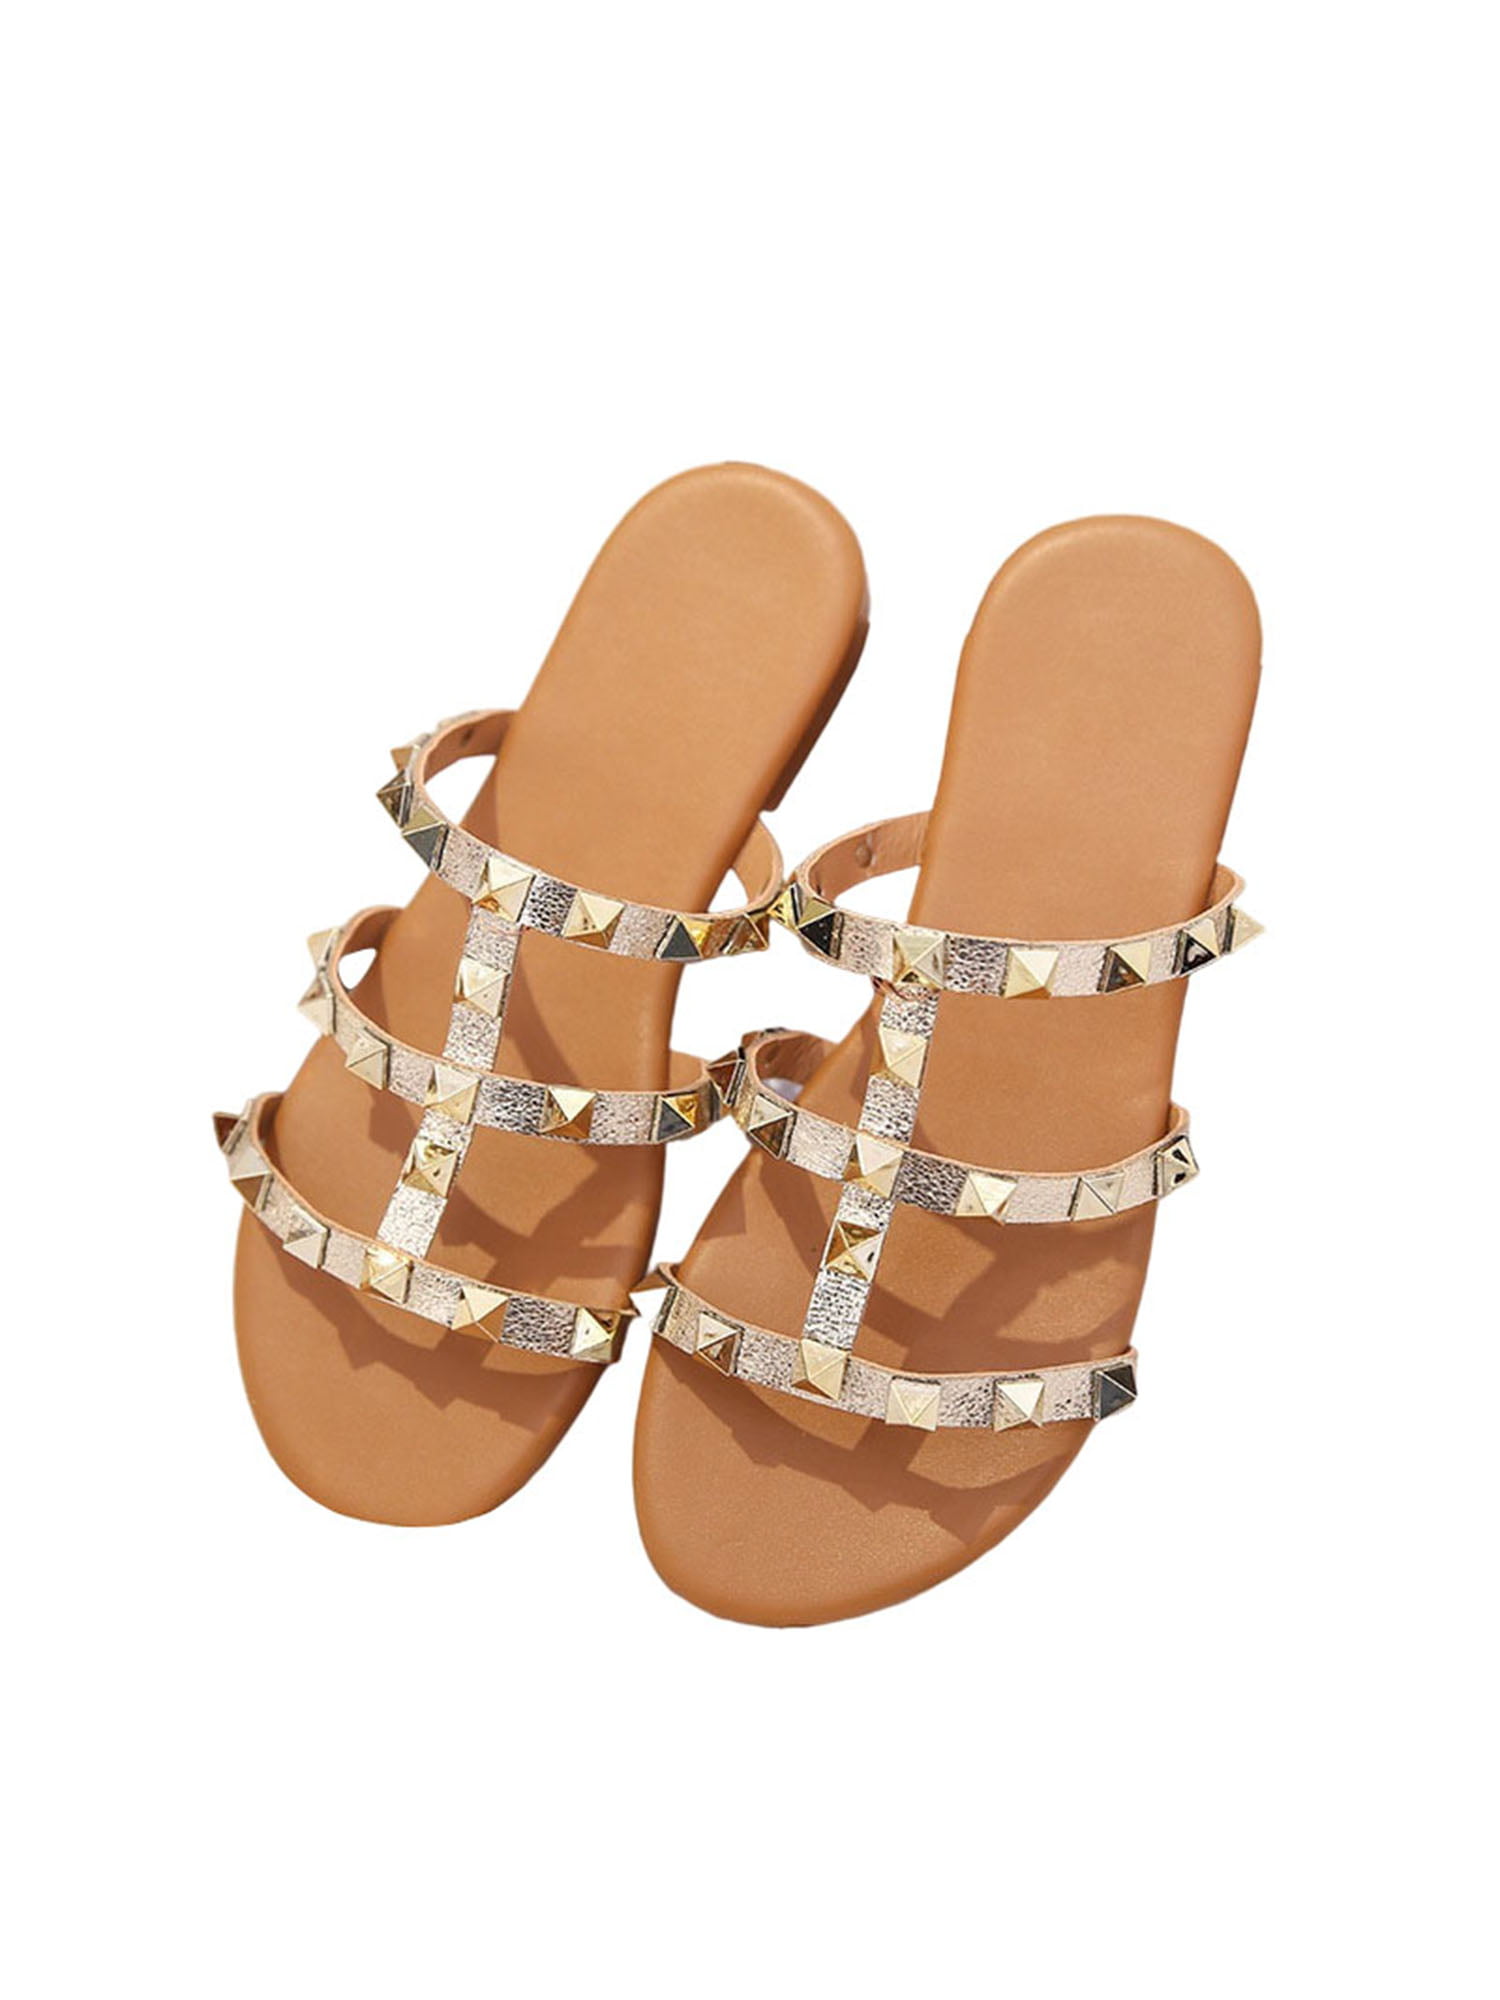 Women Roman Sandals TPR Peep Toe Flat Thong Sandals Soft Bottom Slip on Shoes Casual Summer Outdoor Beach Shoes for Women & Girls 